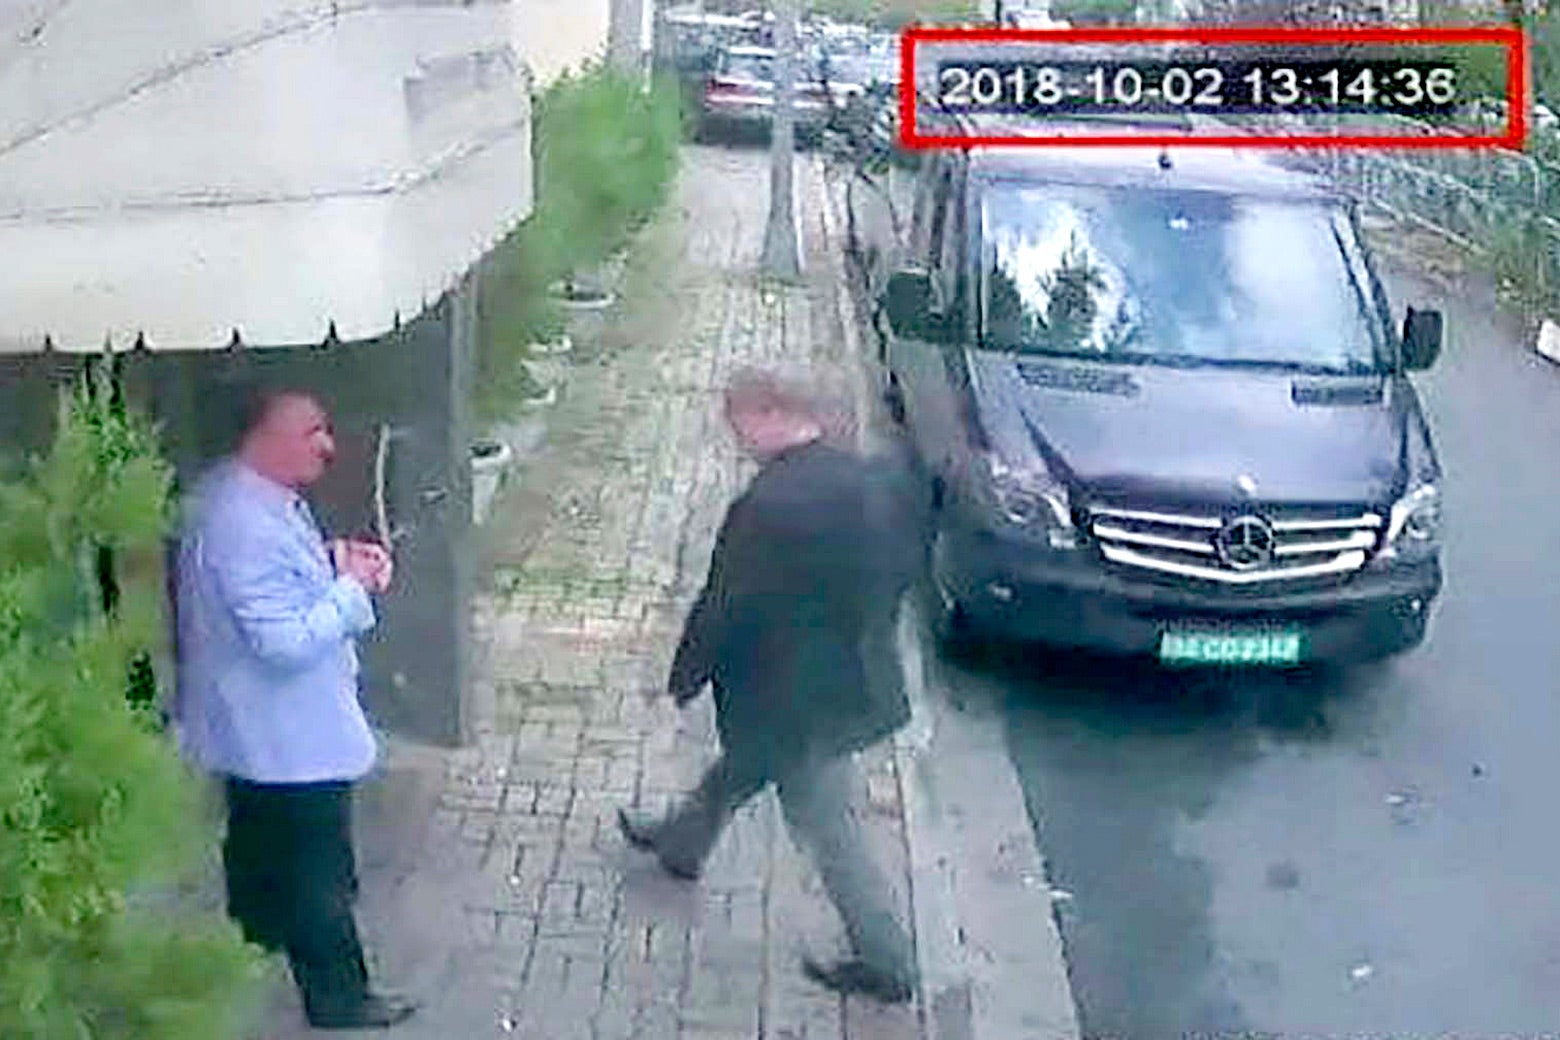 Jamal Khashoggi entering the Saudi Consulate in Istanbul